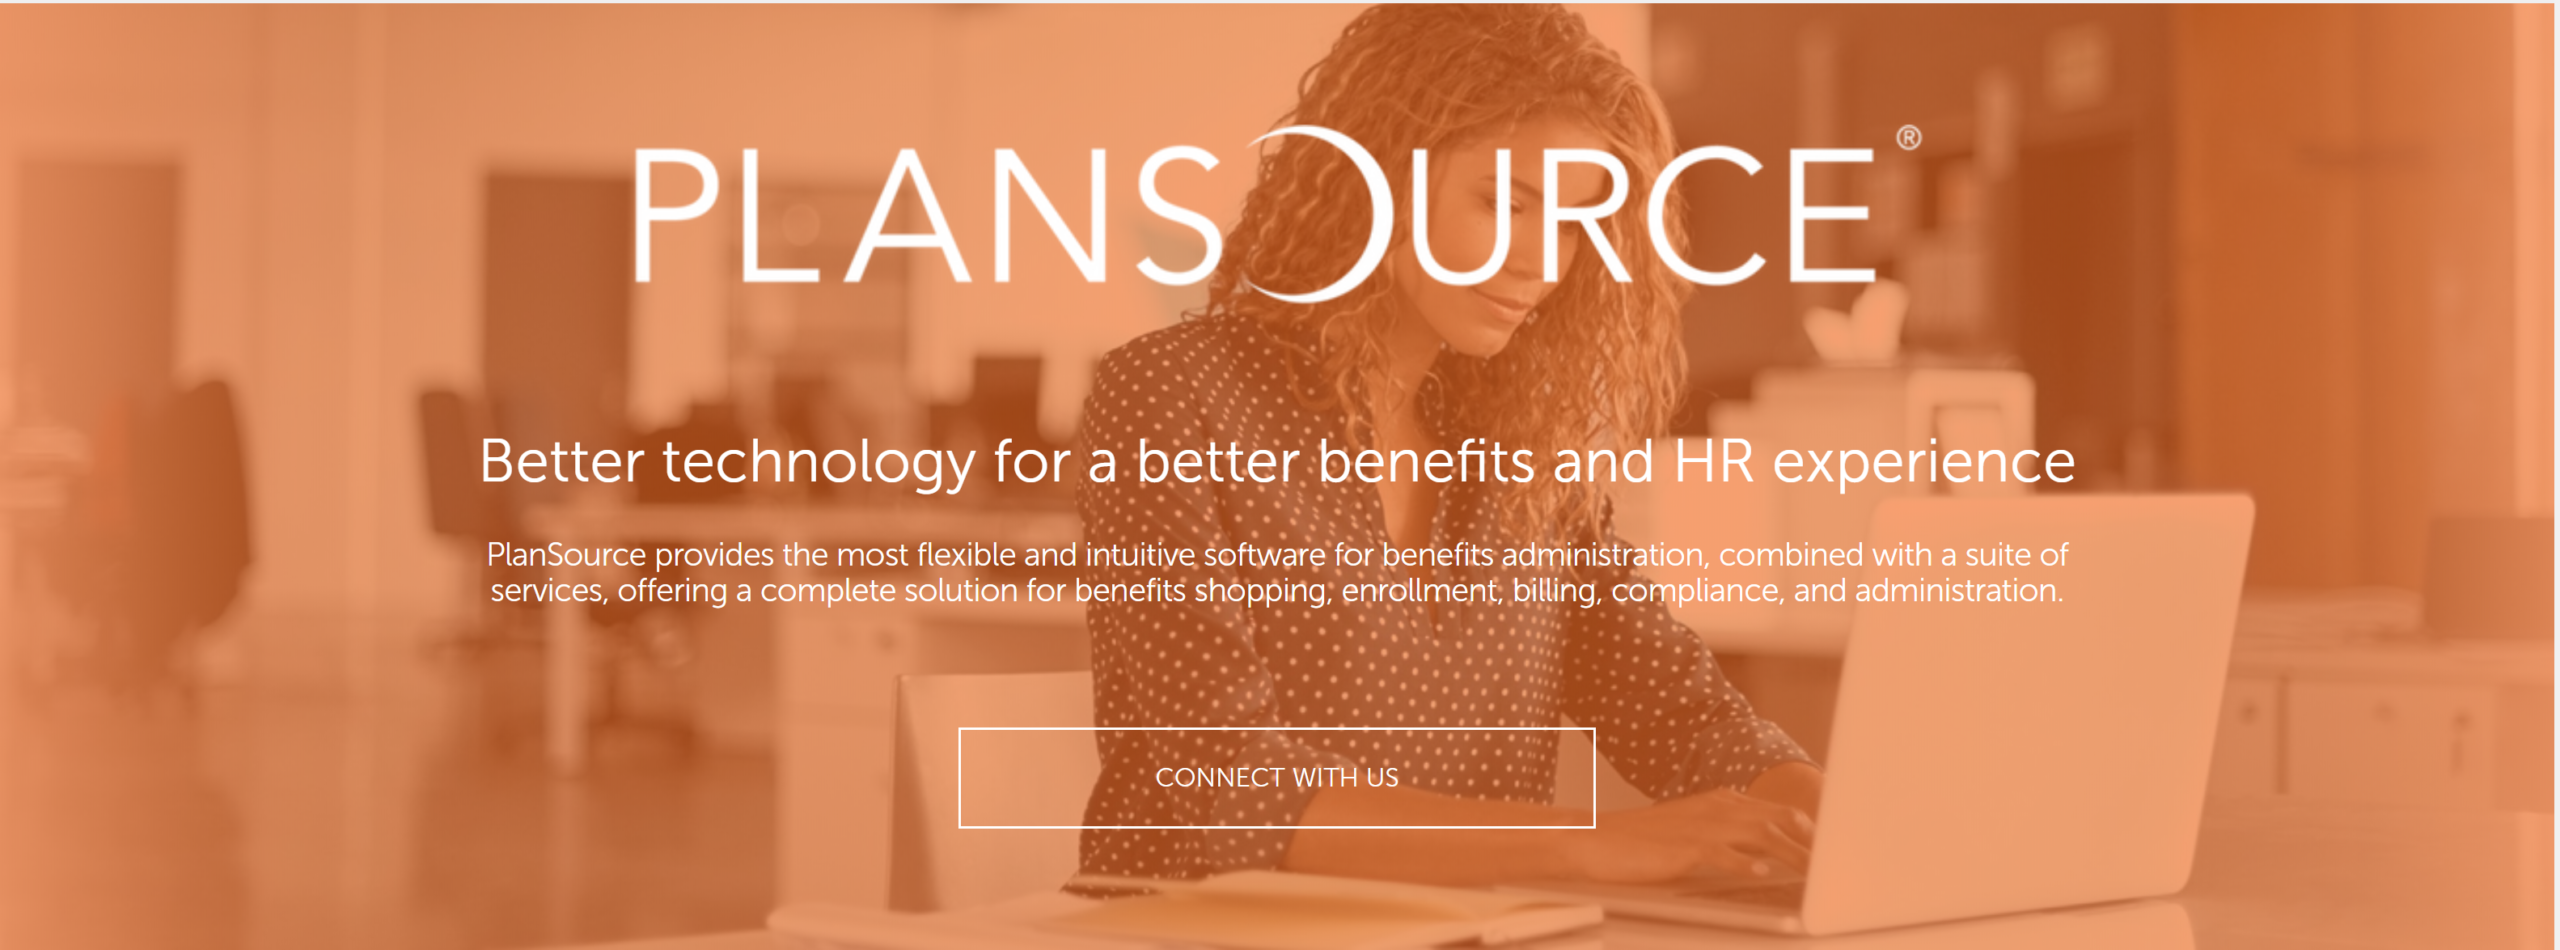 Plansource - Plansource Ultipro employee self-service portal